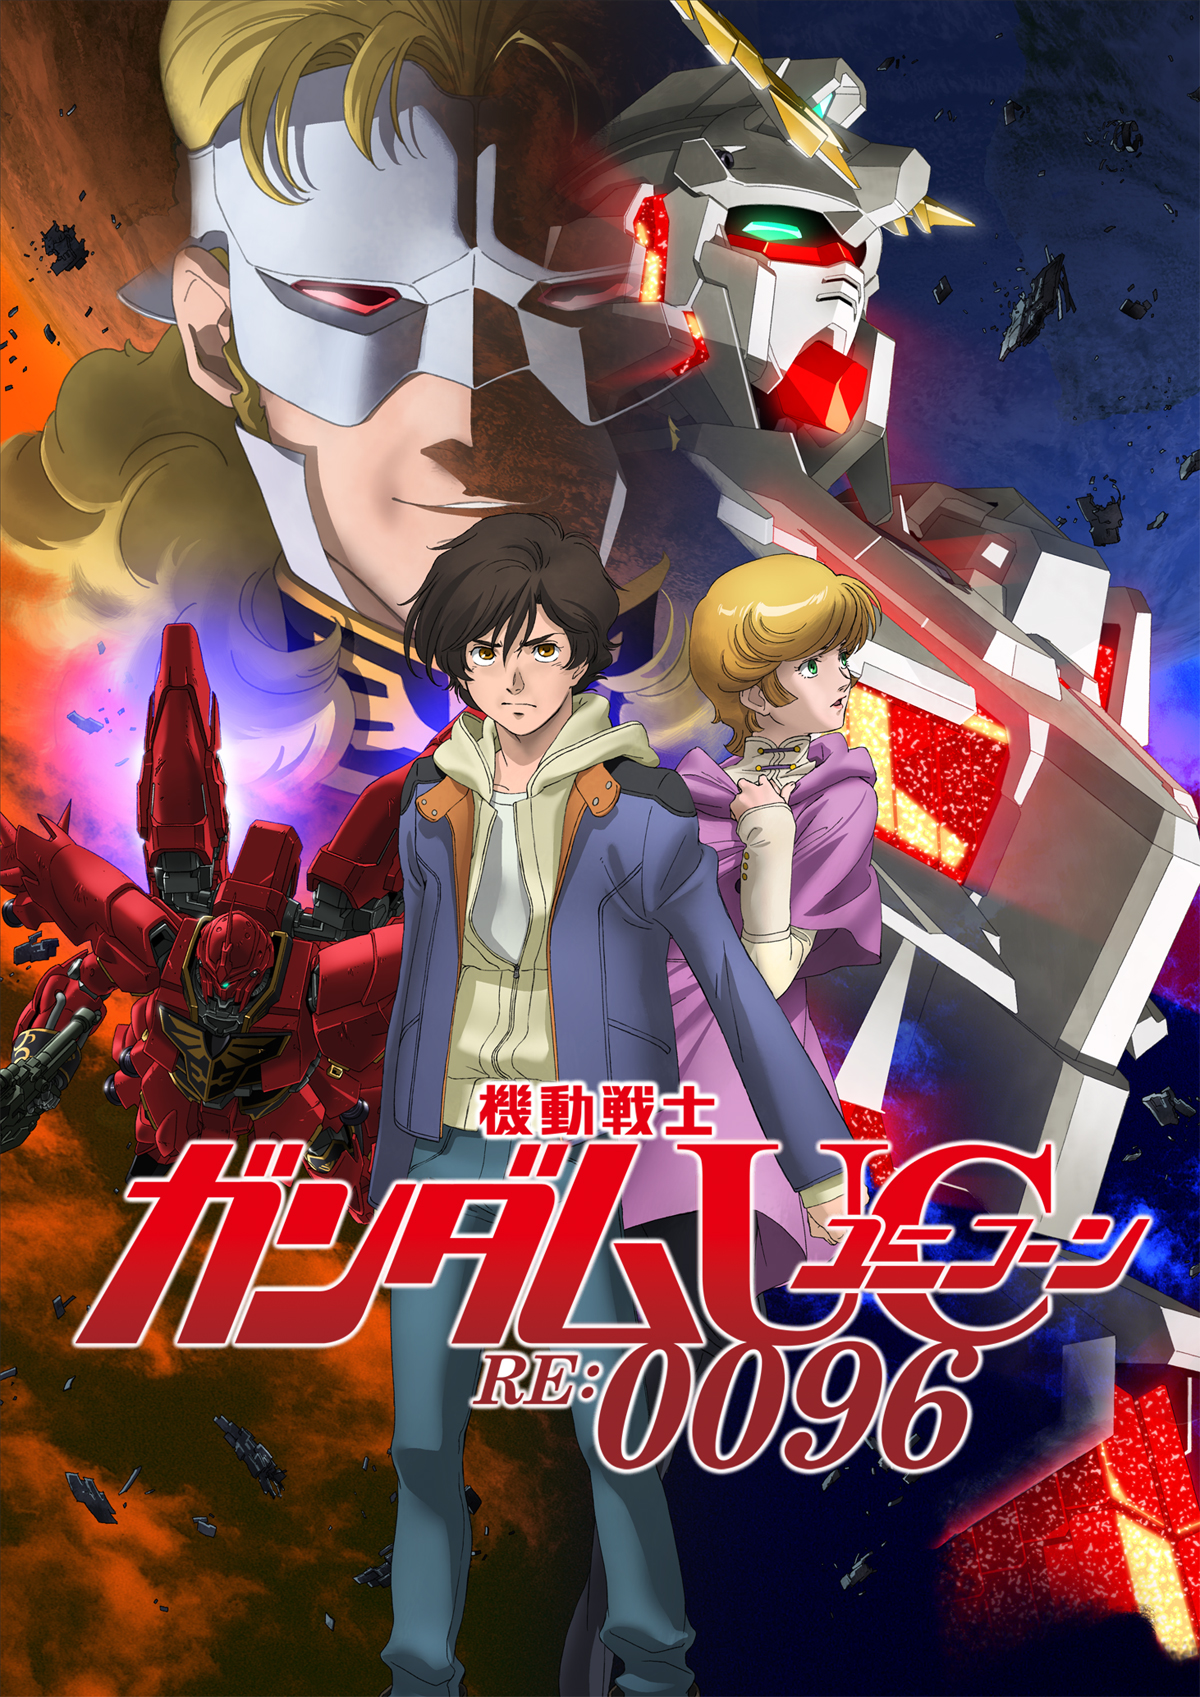 Mobile Suit Gundam Unicorn Re 0096 The Gundam Wiki Fandom